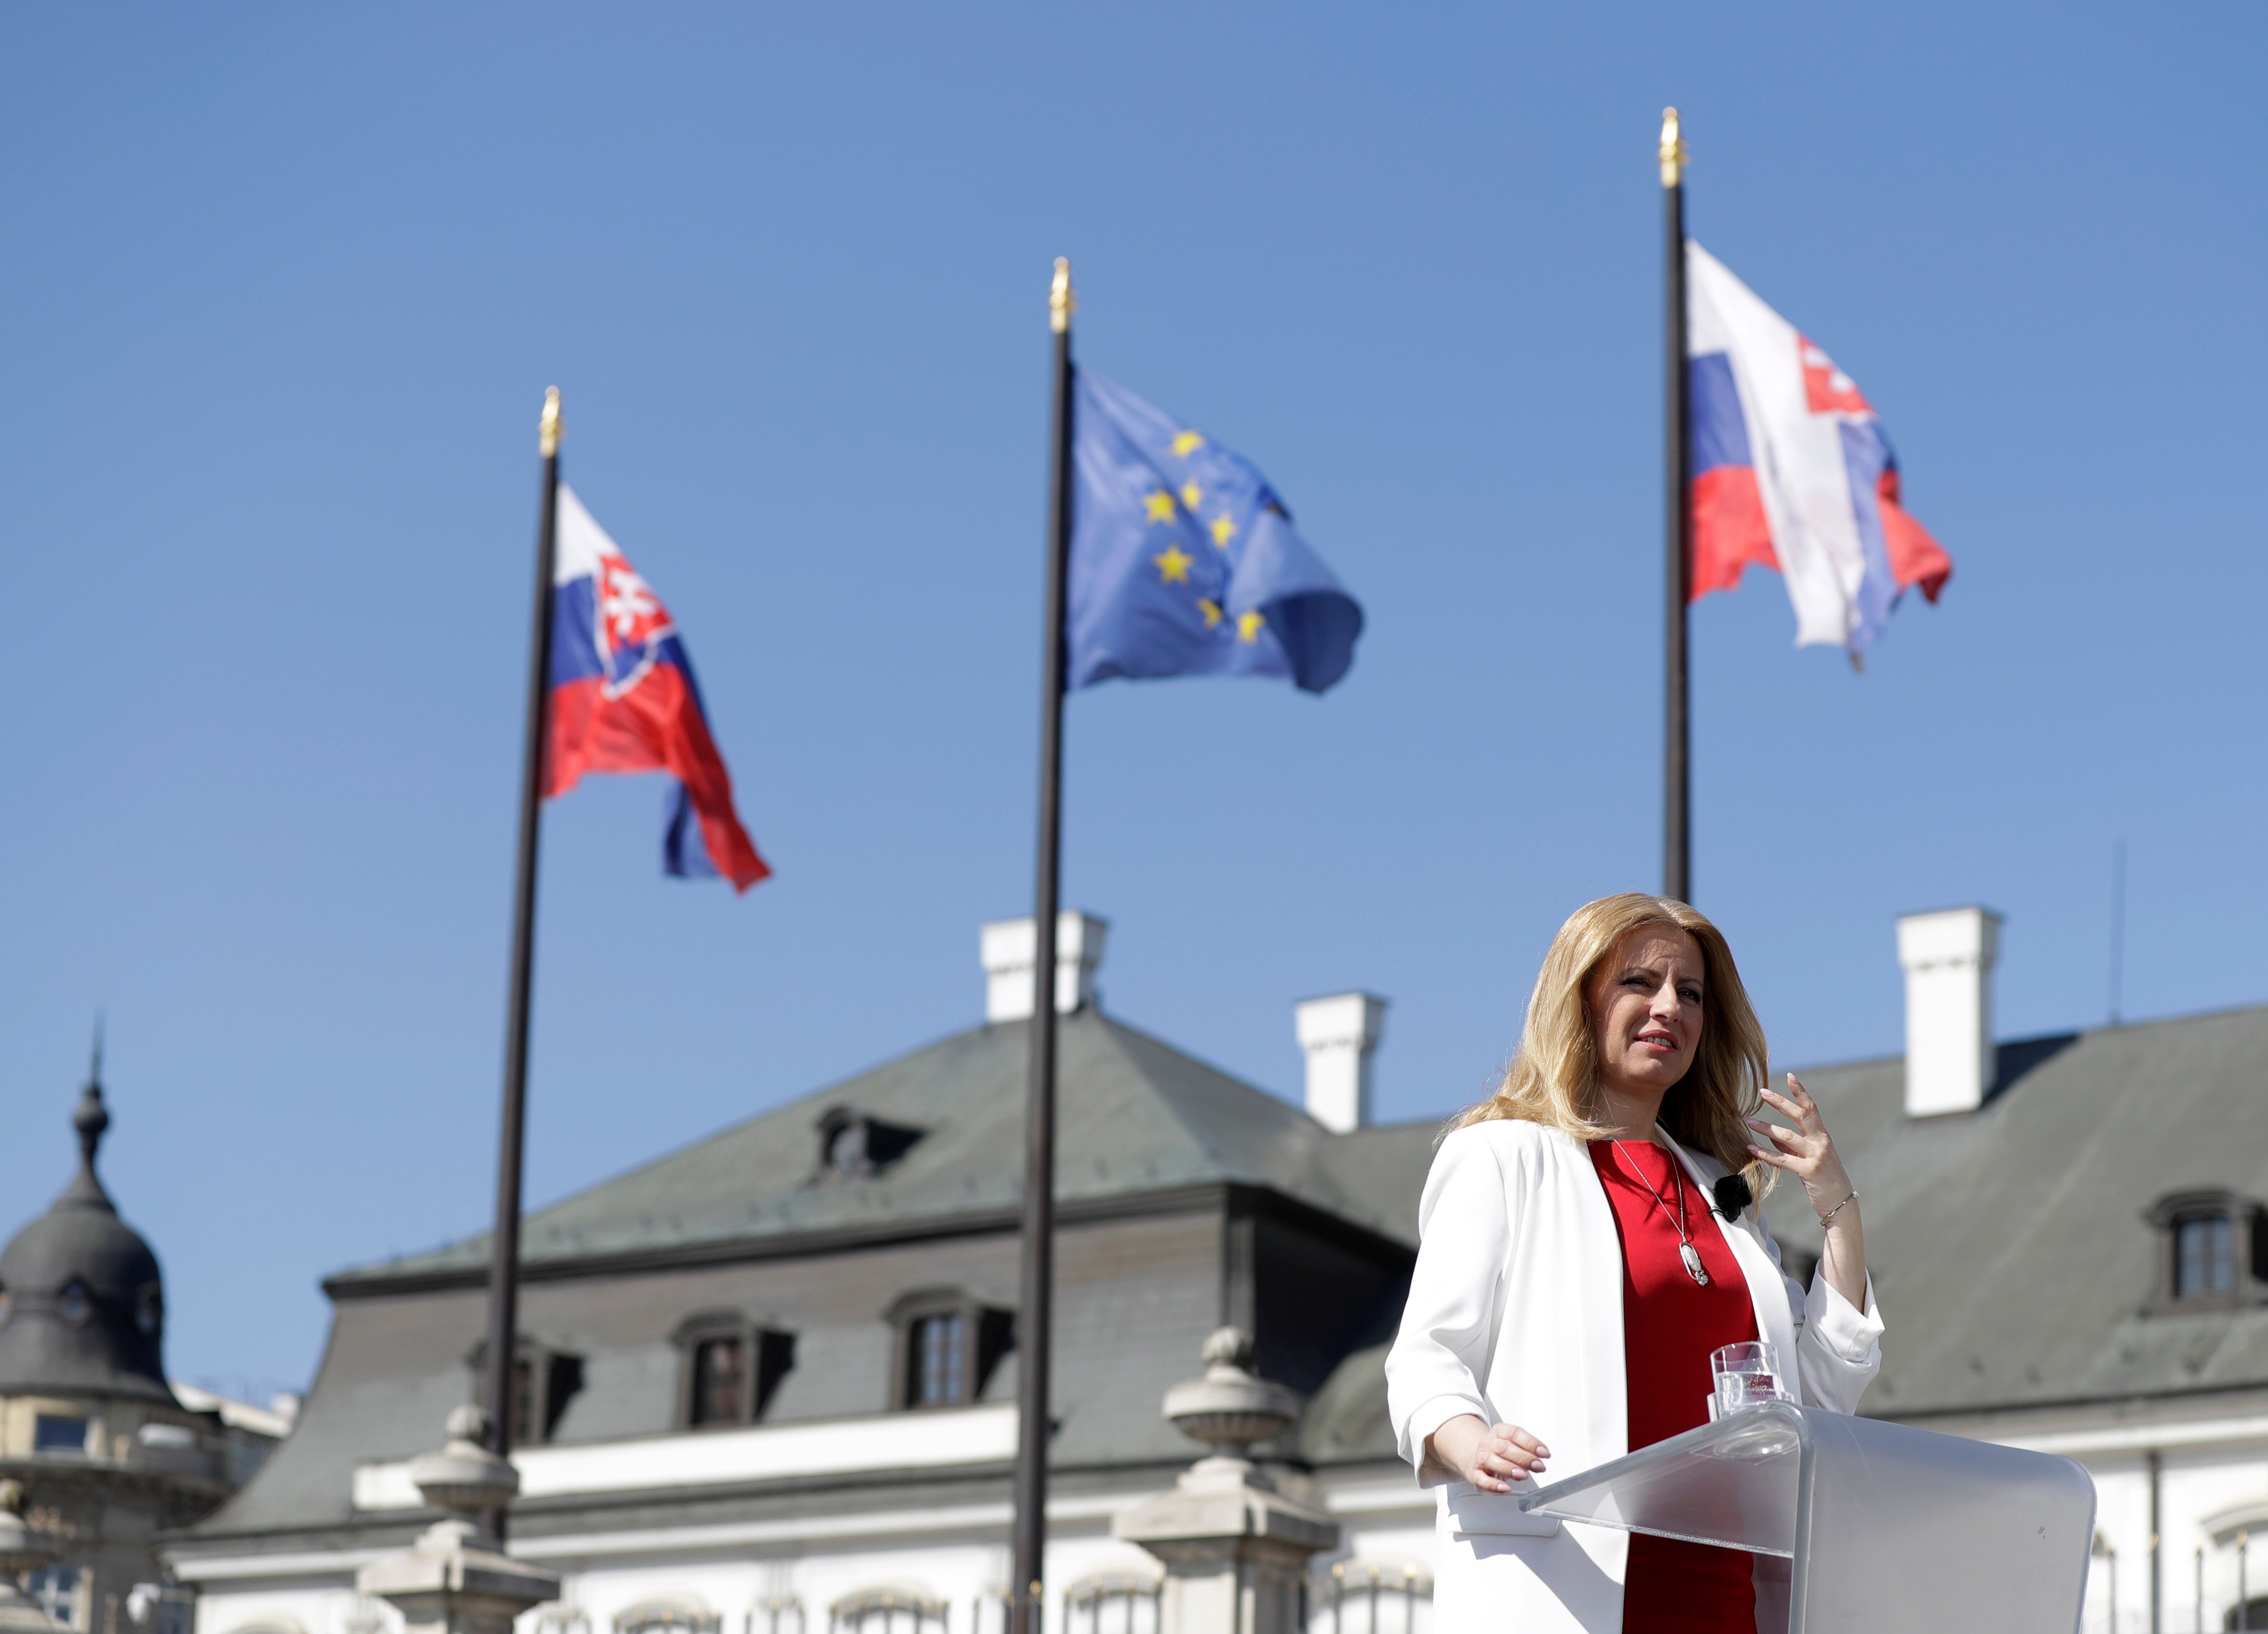 Slovak president unnerves western allies by deciding against re-election bid